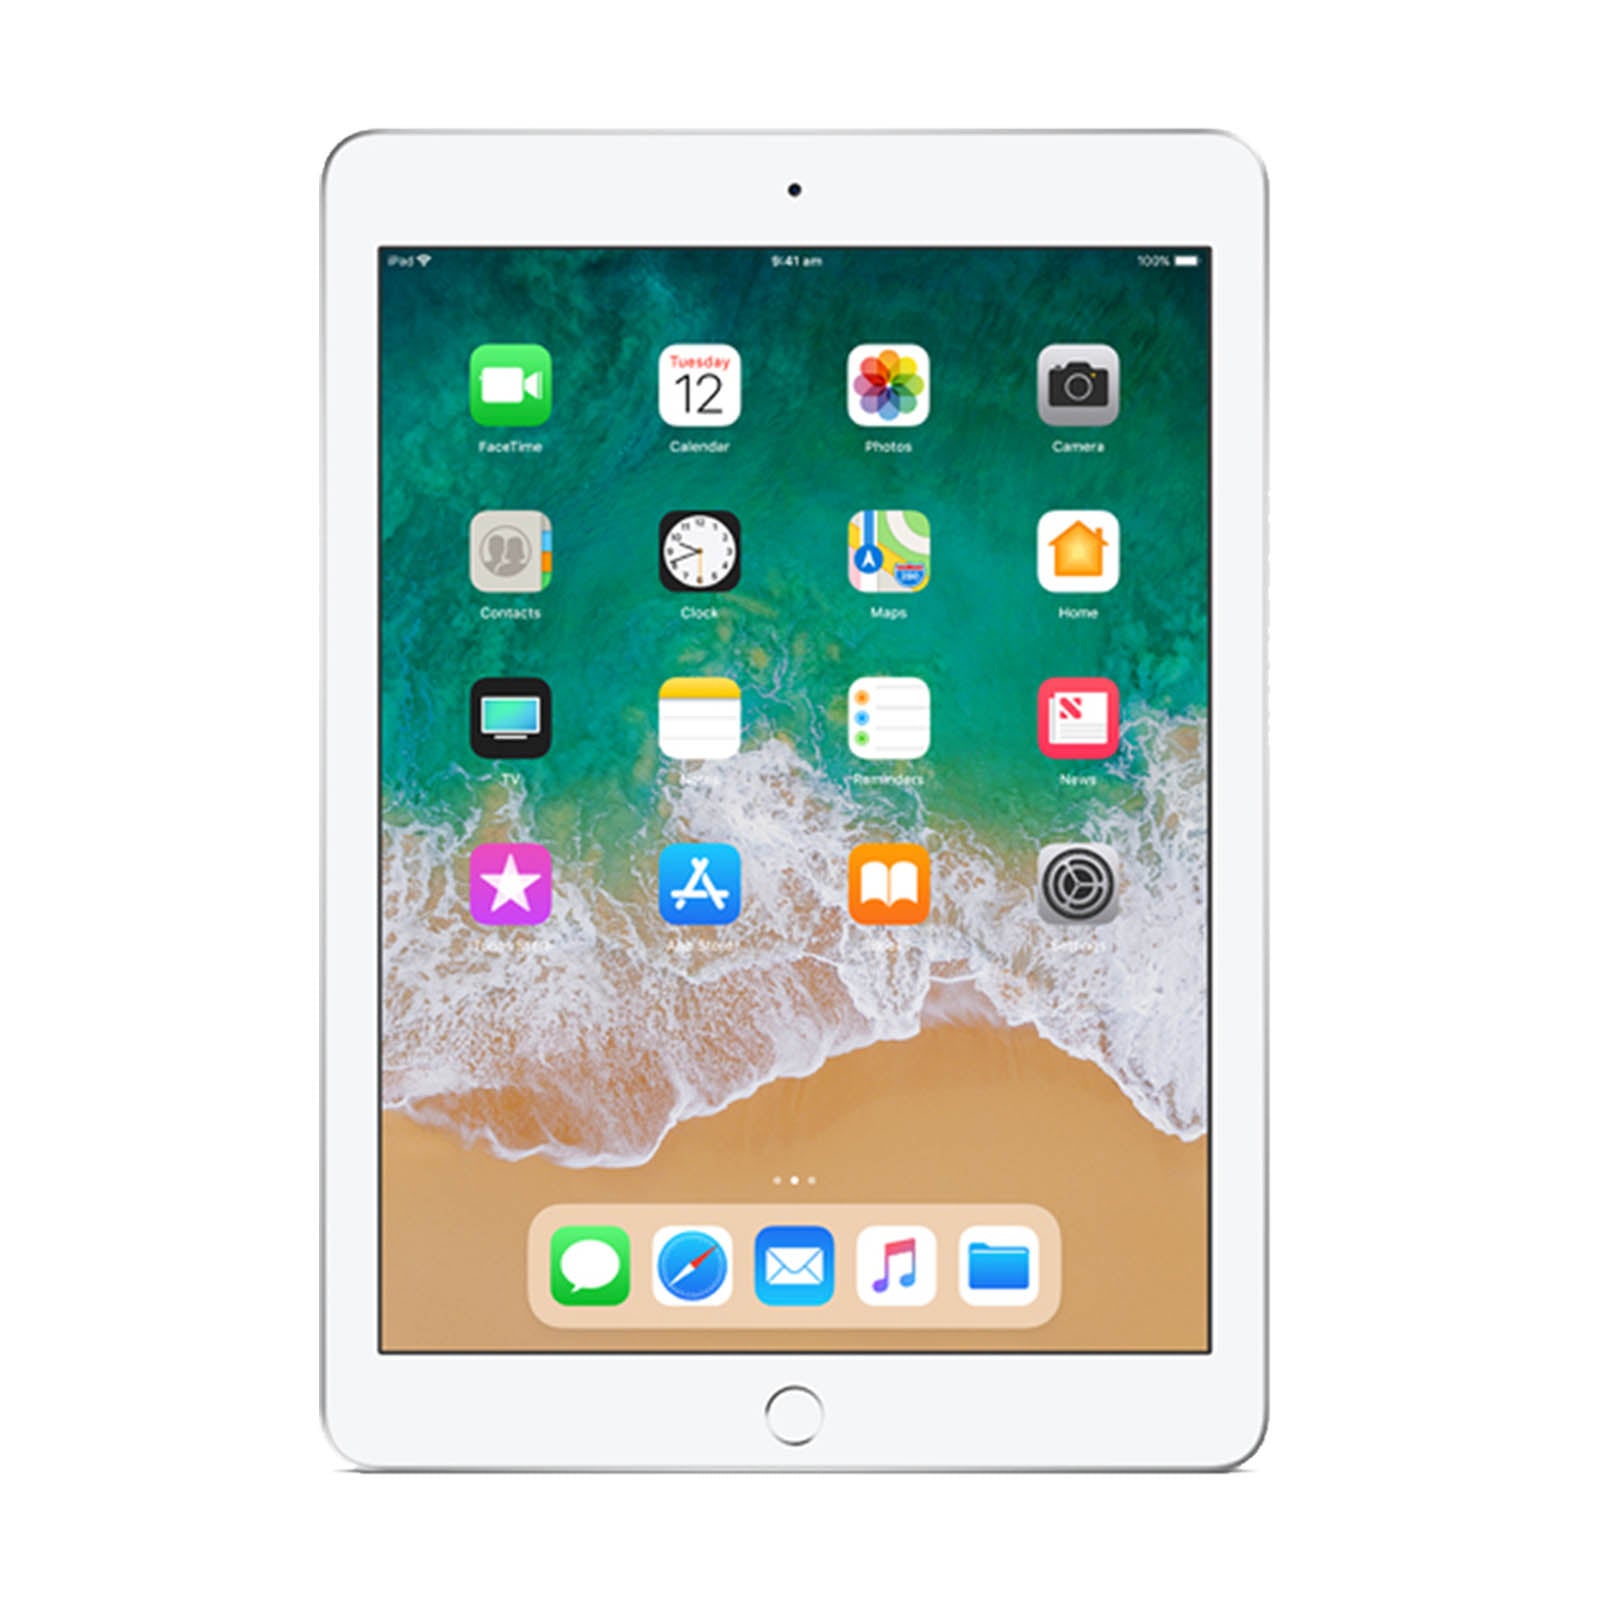 Apple iPad 5th Gen 9.7" 128GB Silver - Unlocked